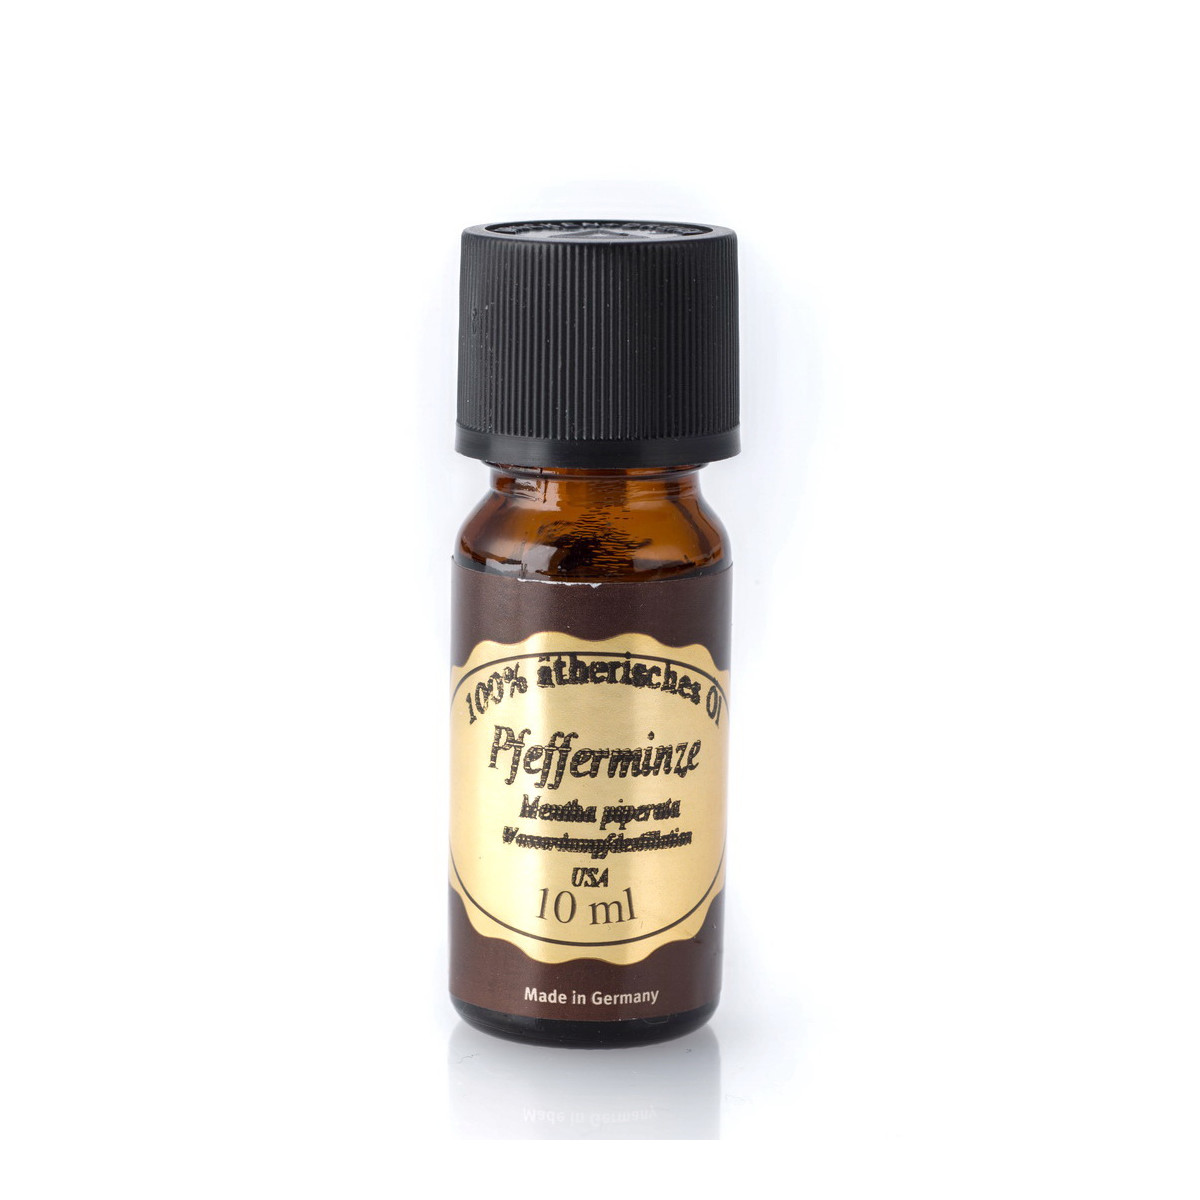 Pfefferminze - 10 ml Pajoma 100% ätherisches Öl